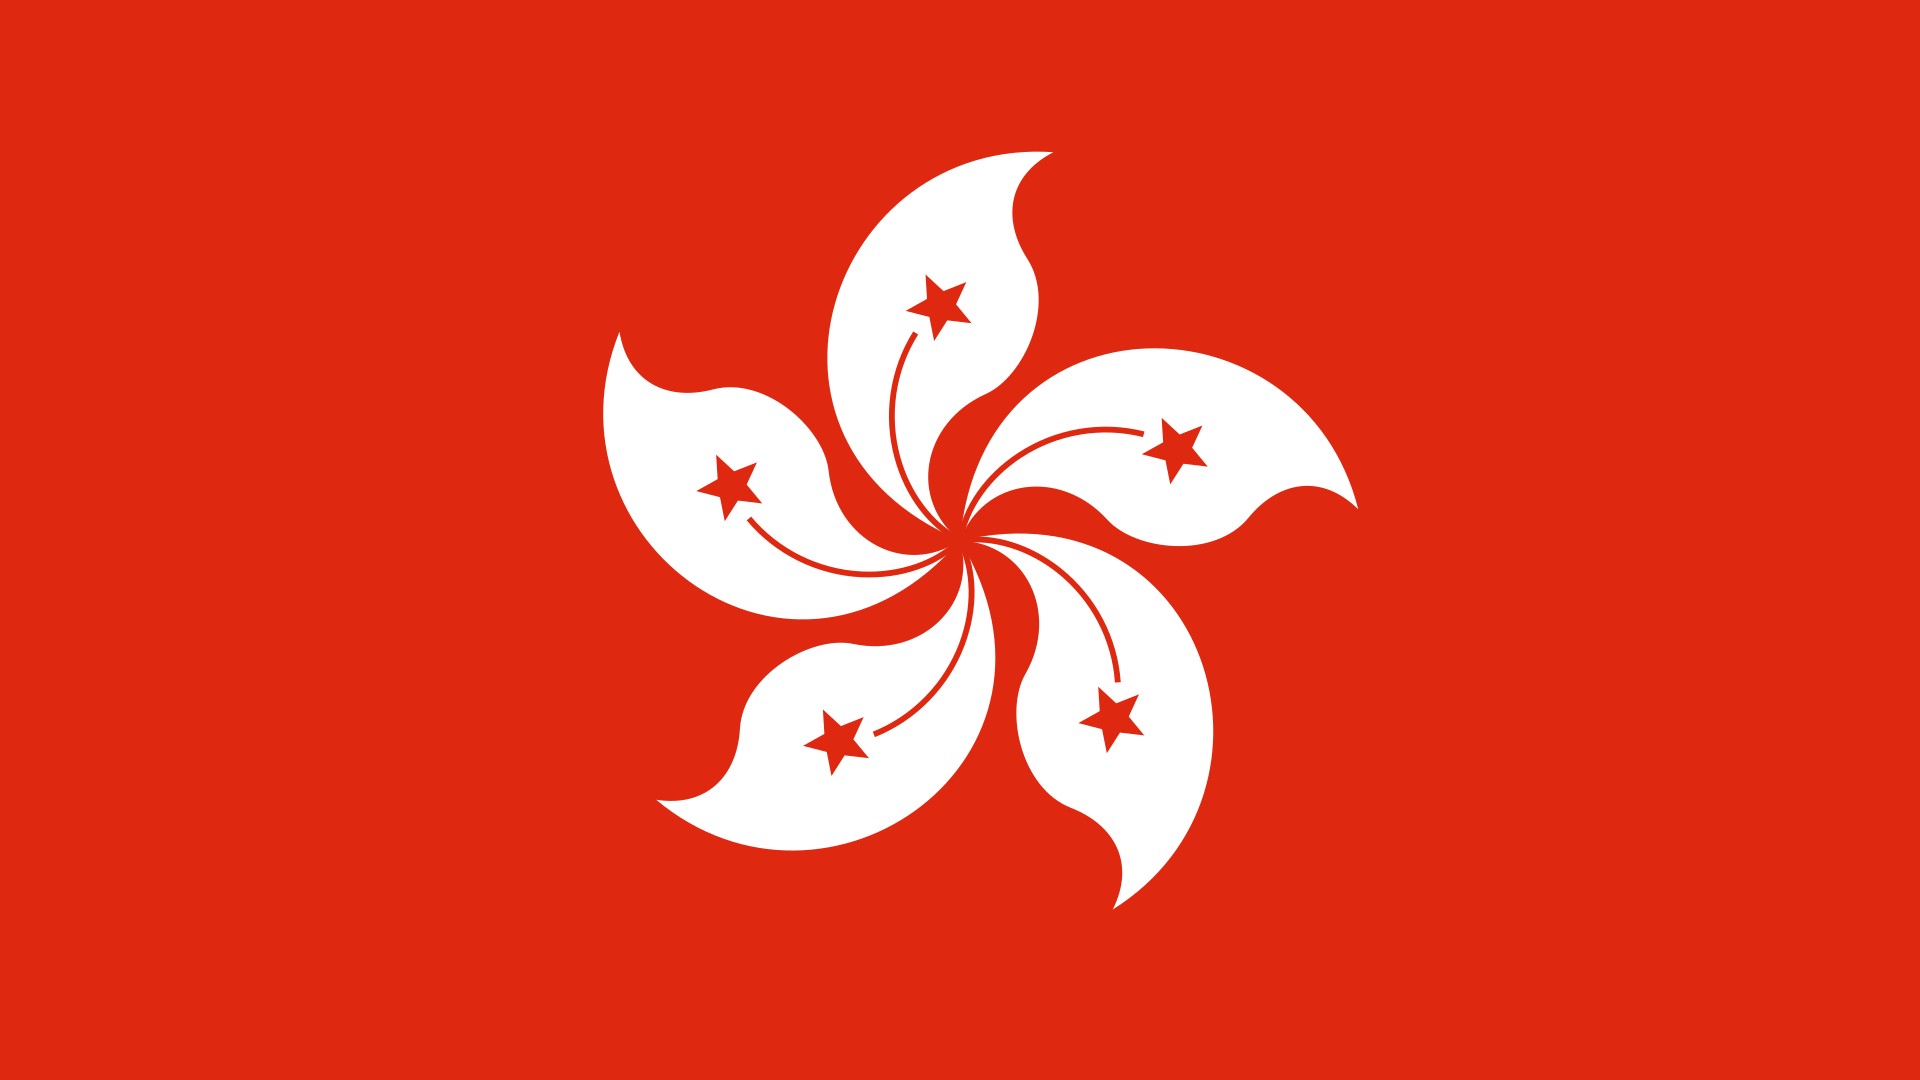 An image of the flag of Hong Kong